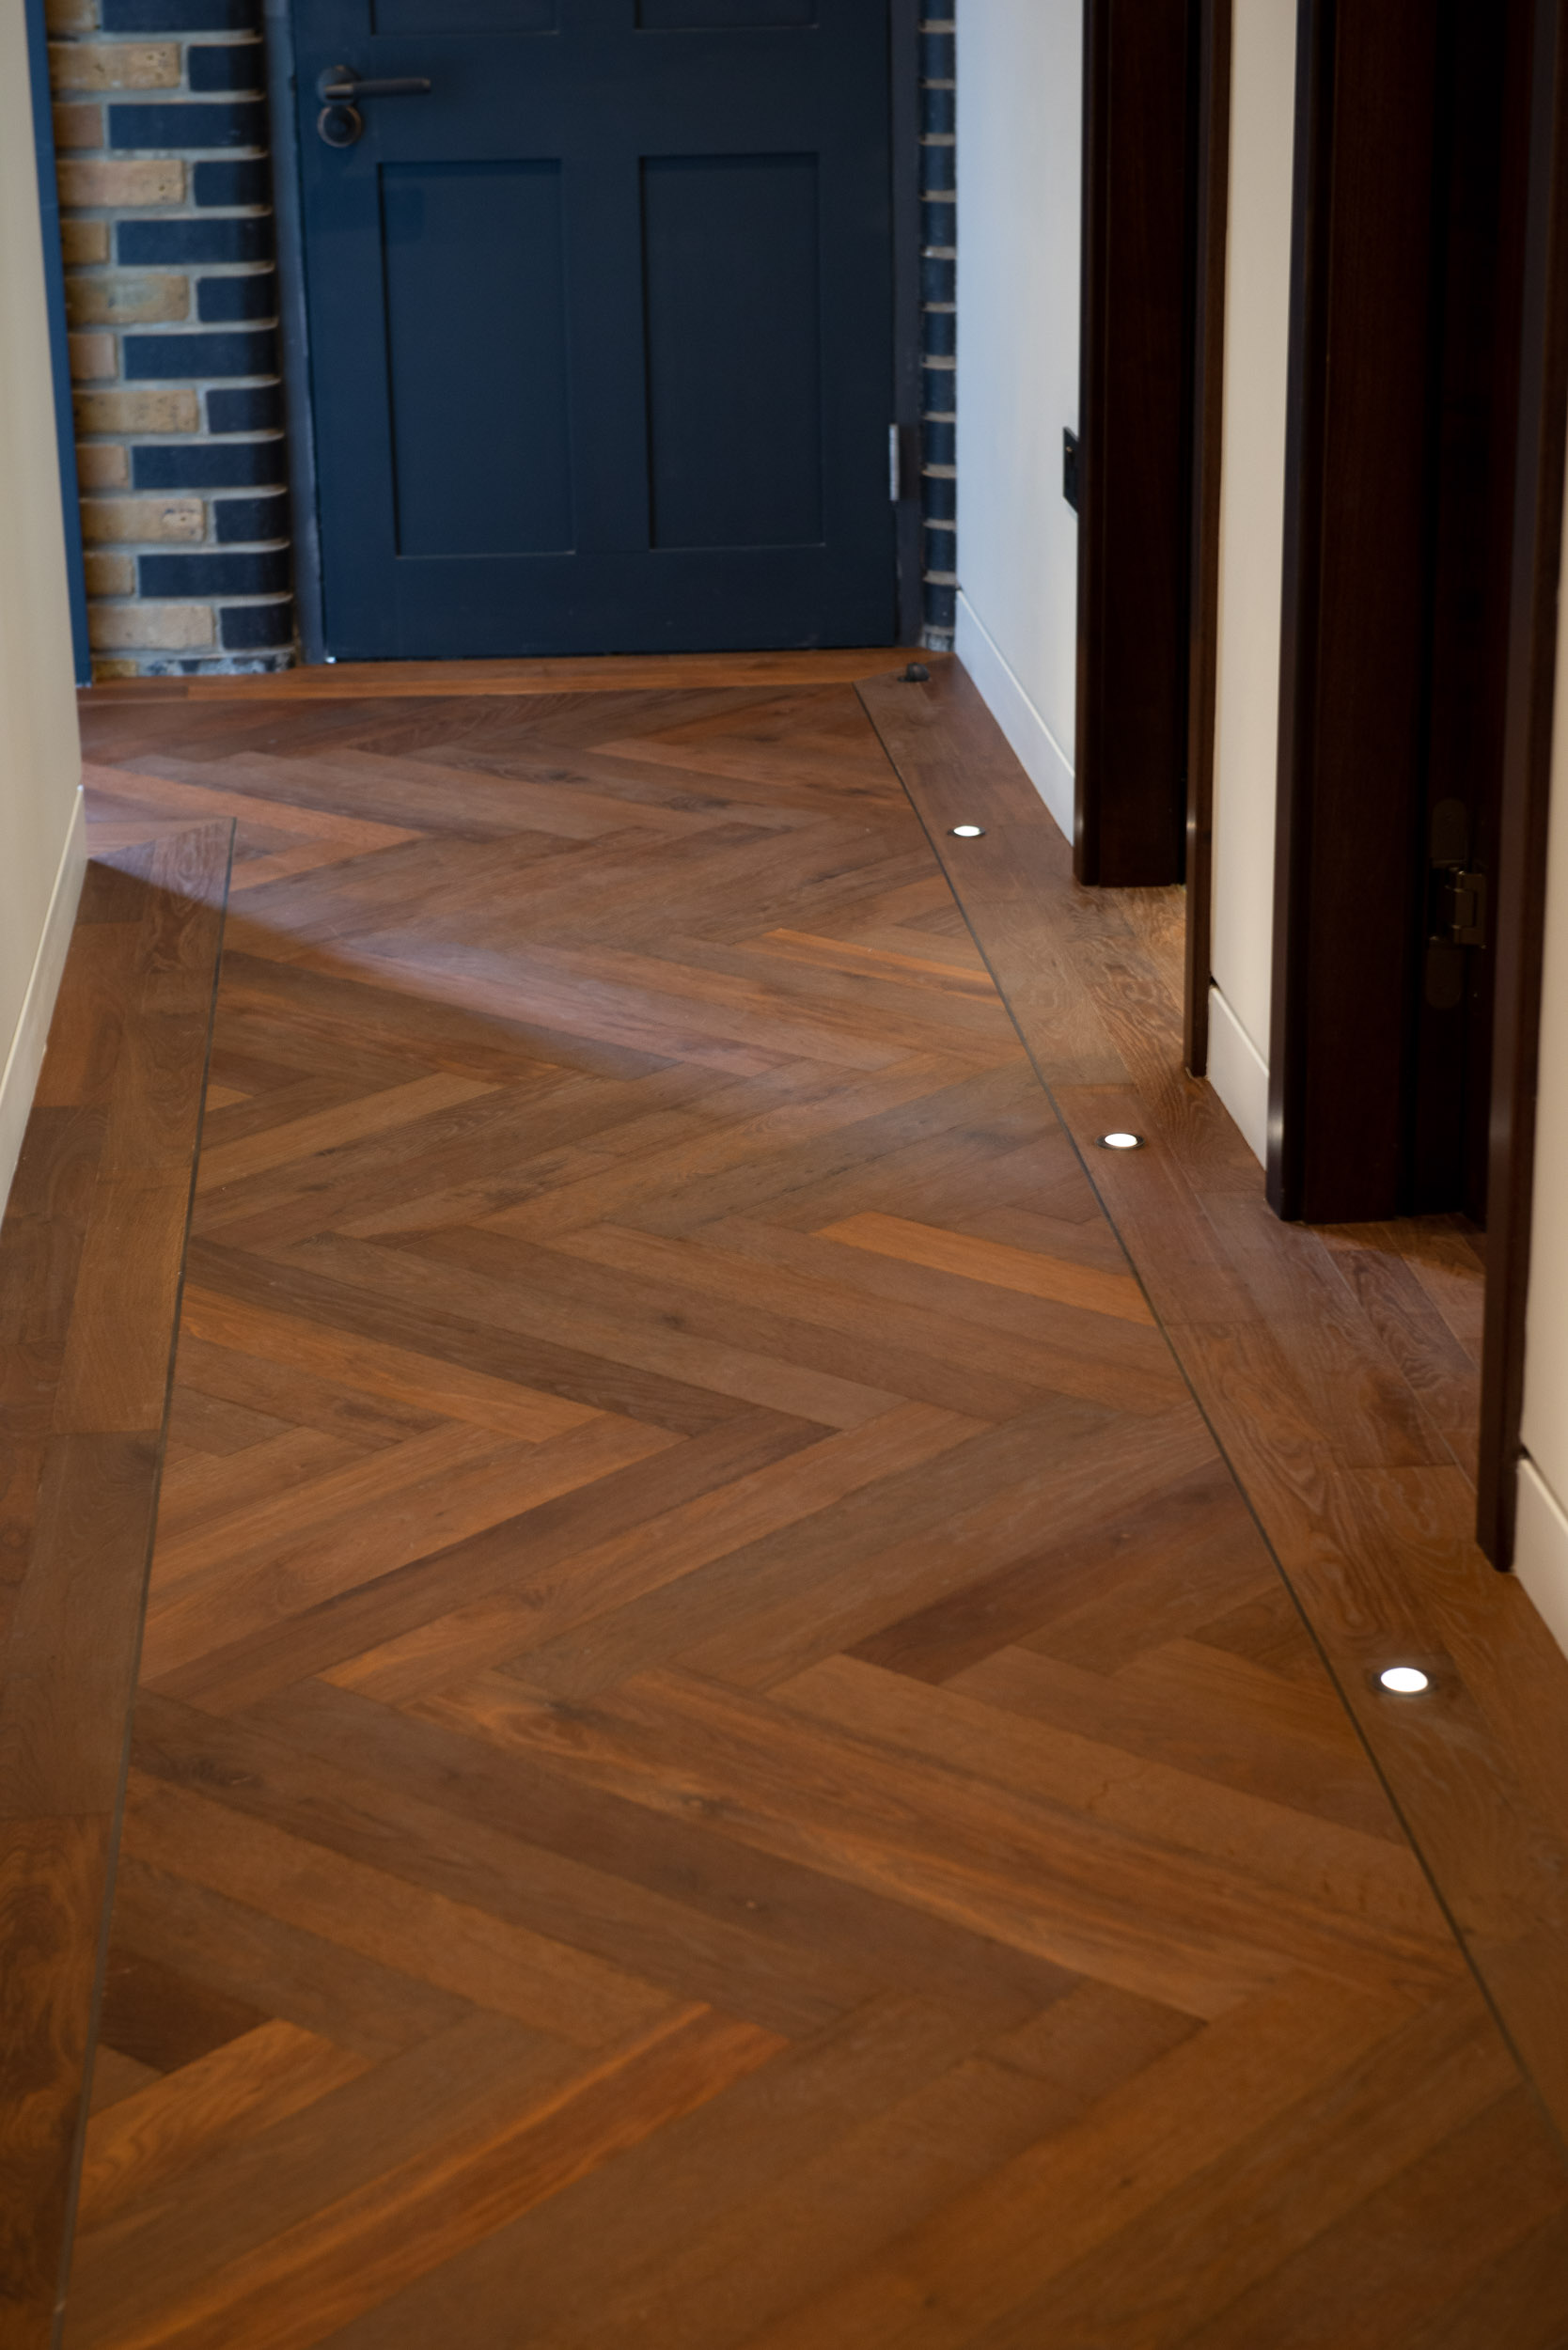 Medium Thermo Oiled Herringbone Parquet Wood Flooring in hallway